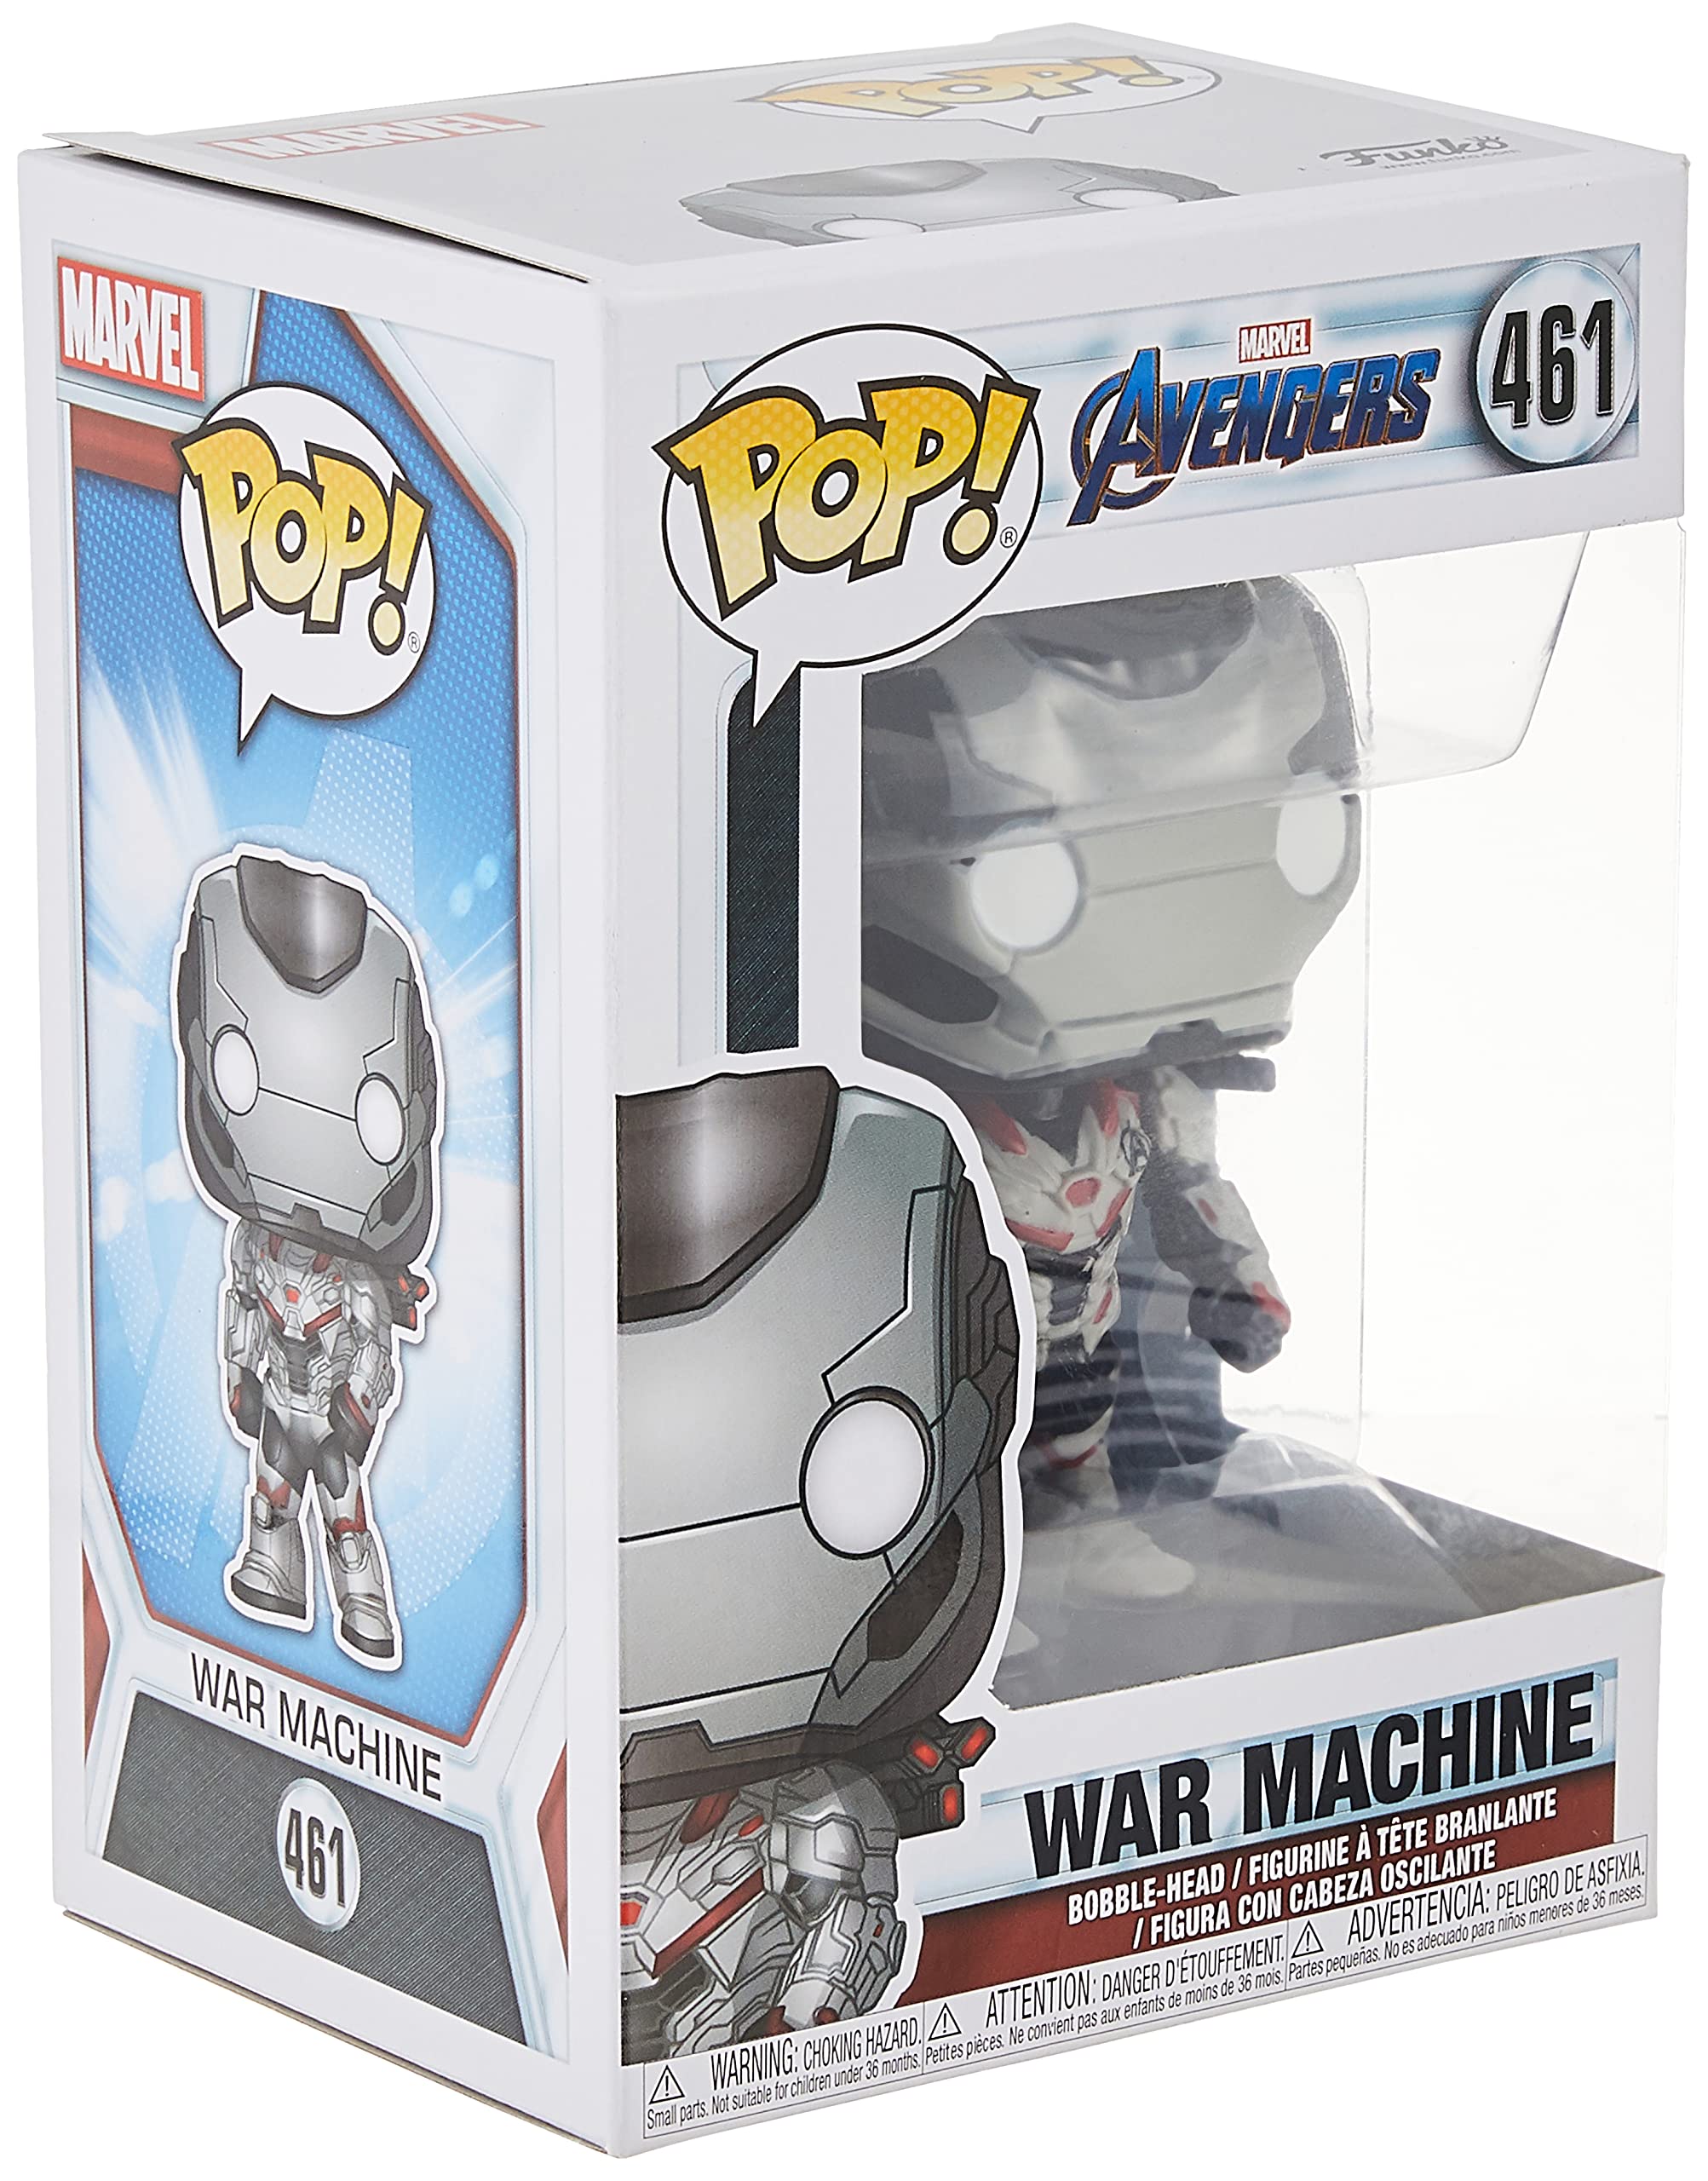 Funko Pop! Marvel: Avengers Endgame - War Machine (Team Suit) Amazon Exclusive, Multicolor